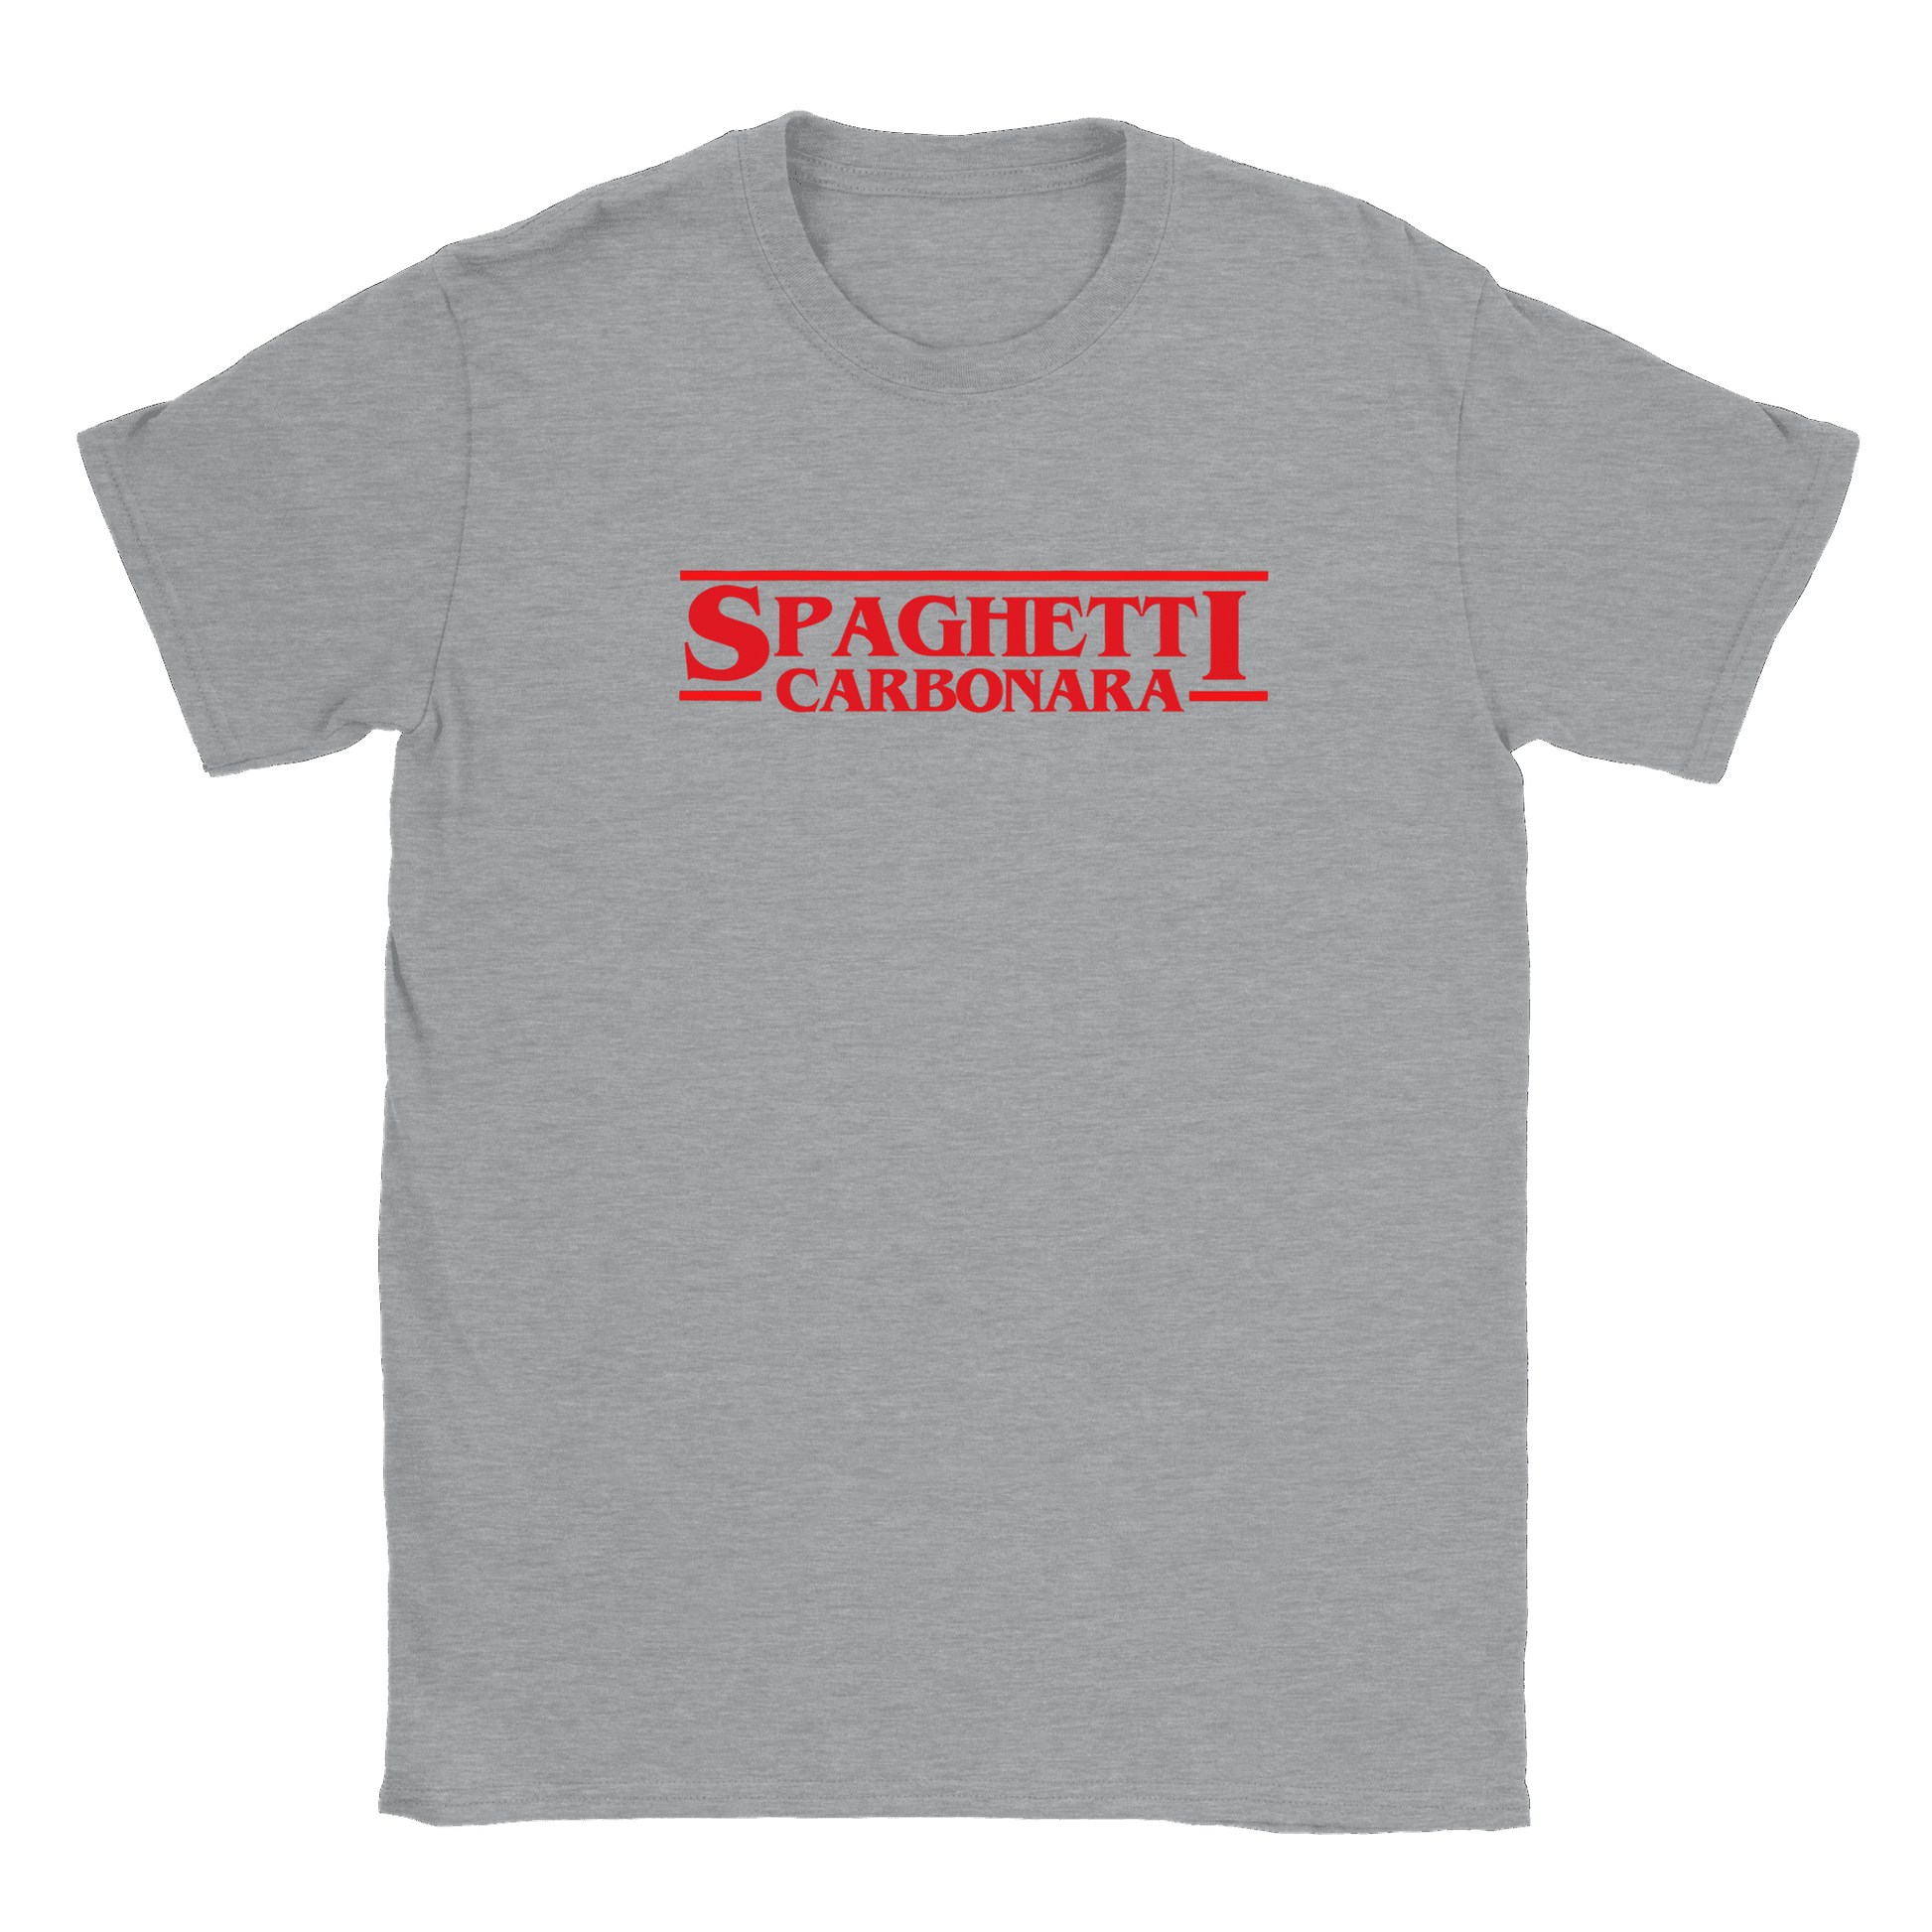 Spaghetti Carbonara - T-shirt Sports Grey